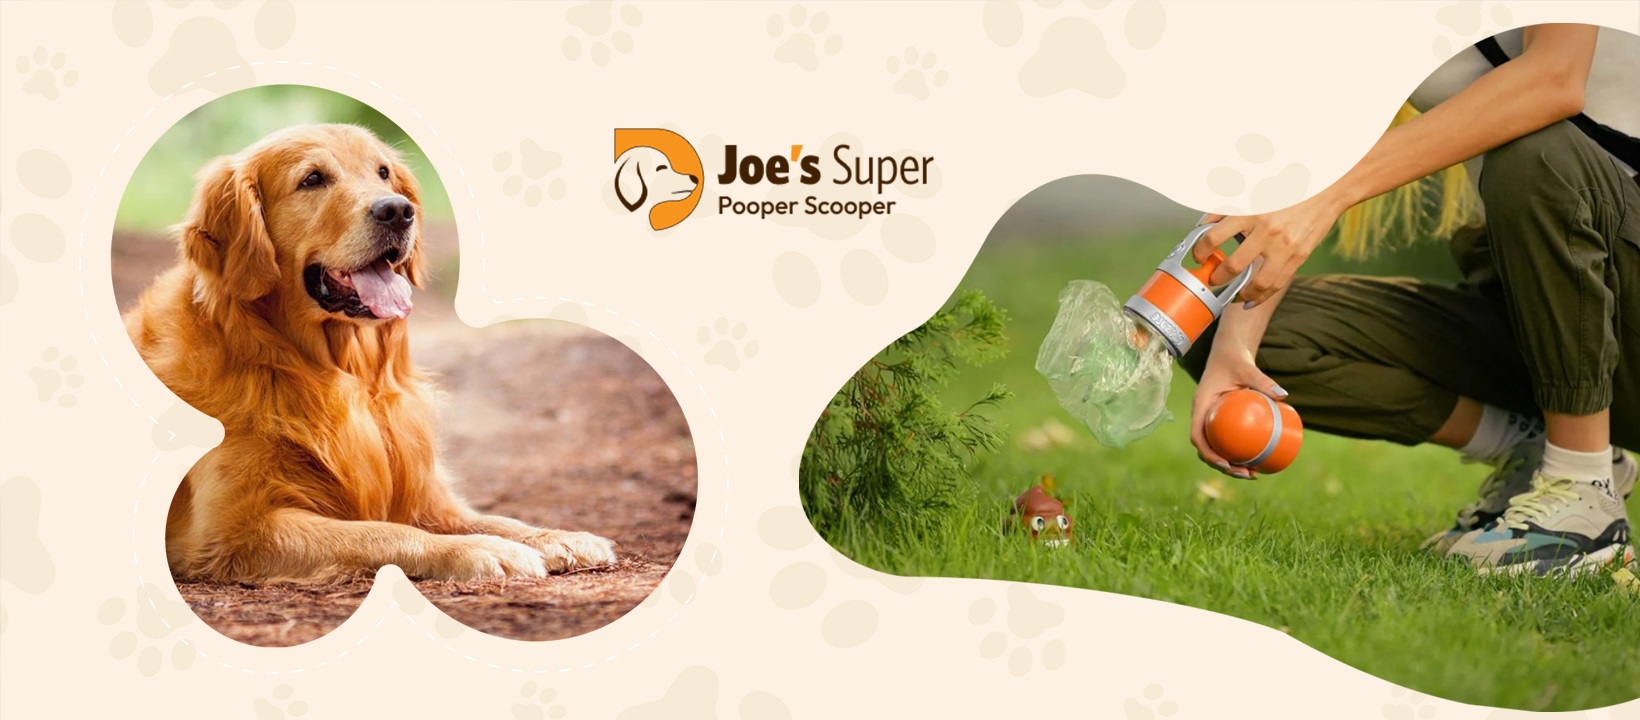 Joe's Super Pooper Scooper Cover Image